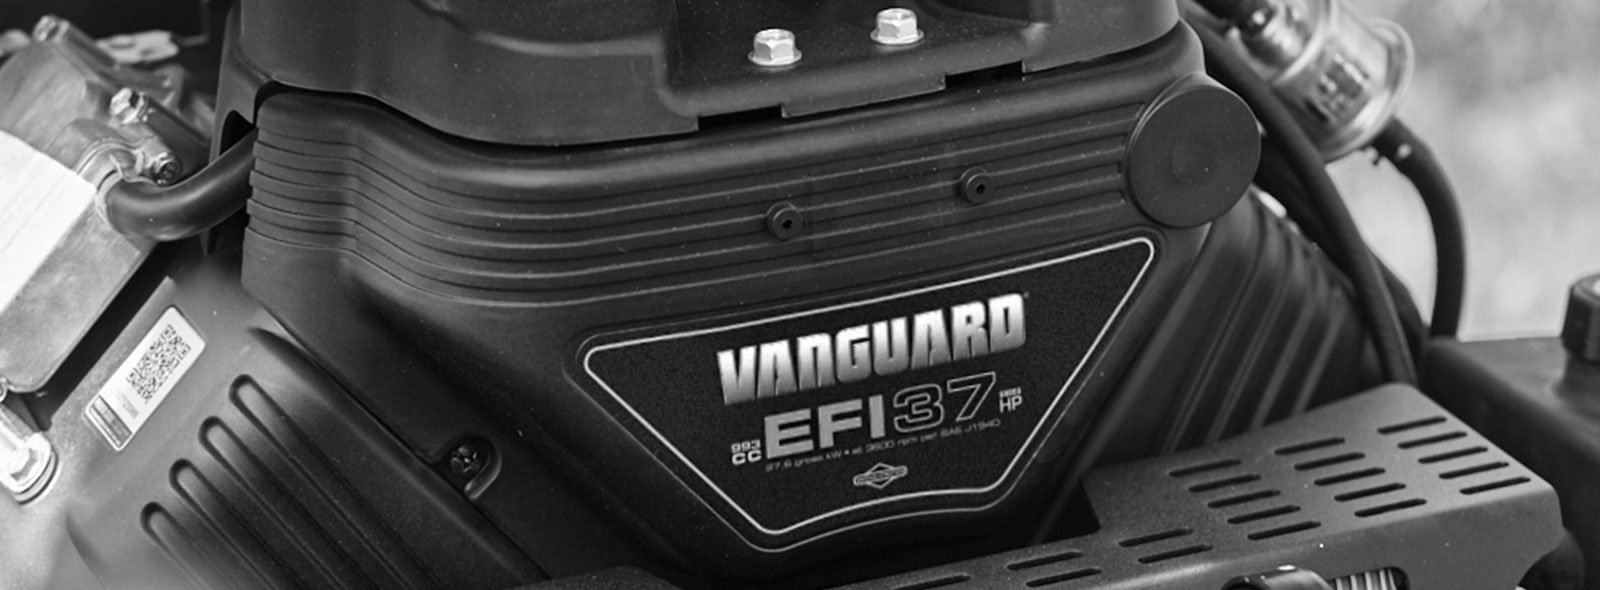 Vanguard Engines